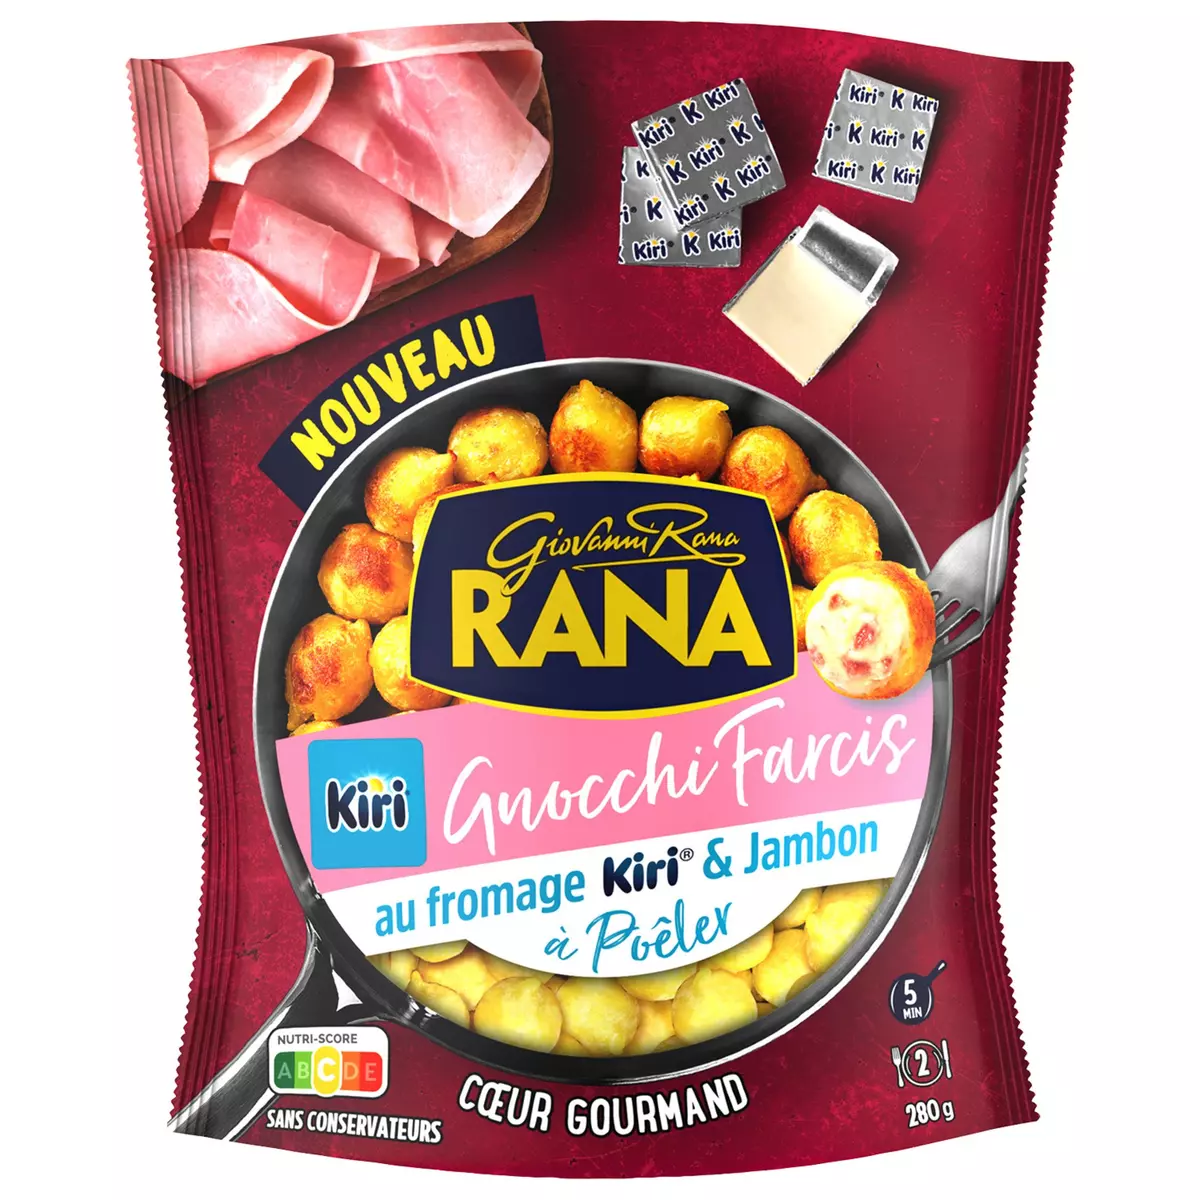 RANA Gnocchi farcis au fromage kiri & jambon à poêler 2 portions 280g